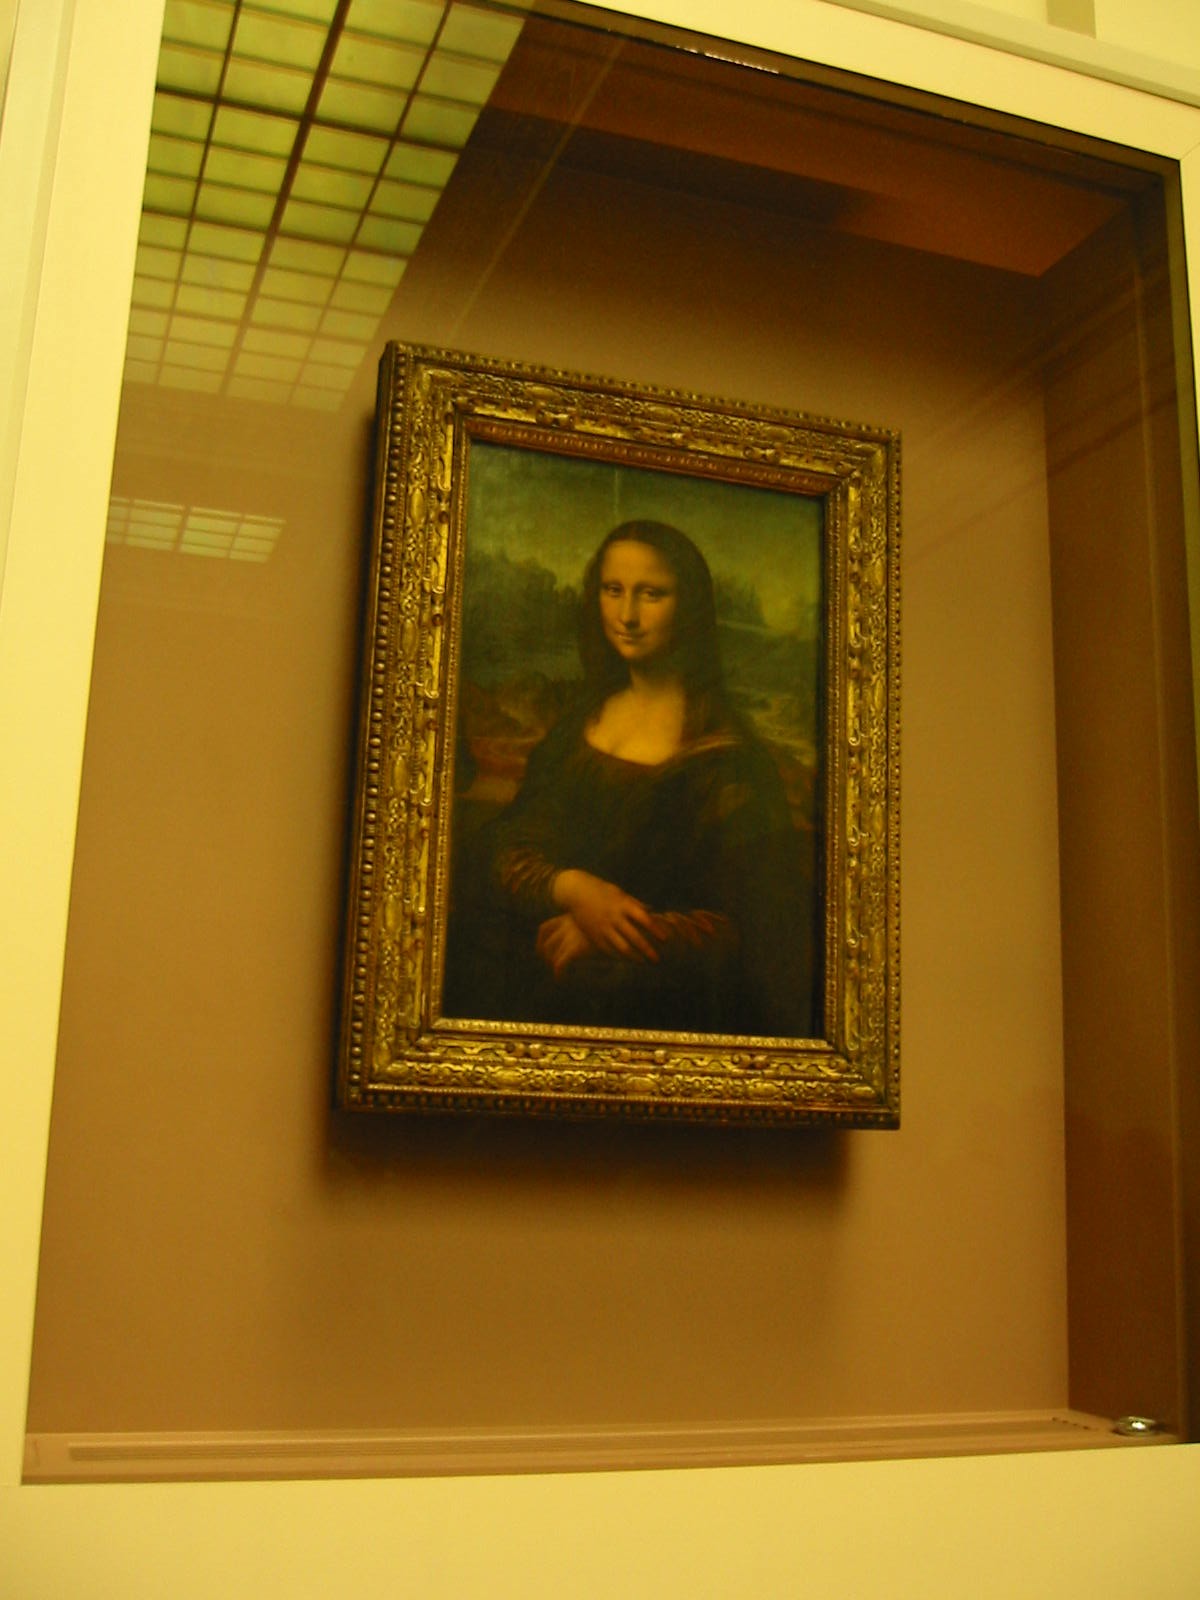 Mona, of course...